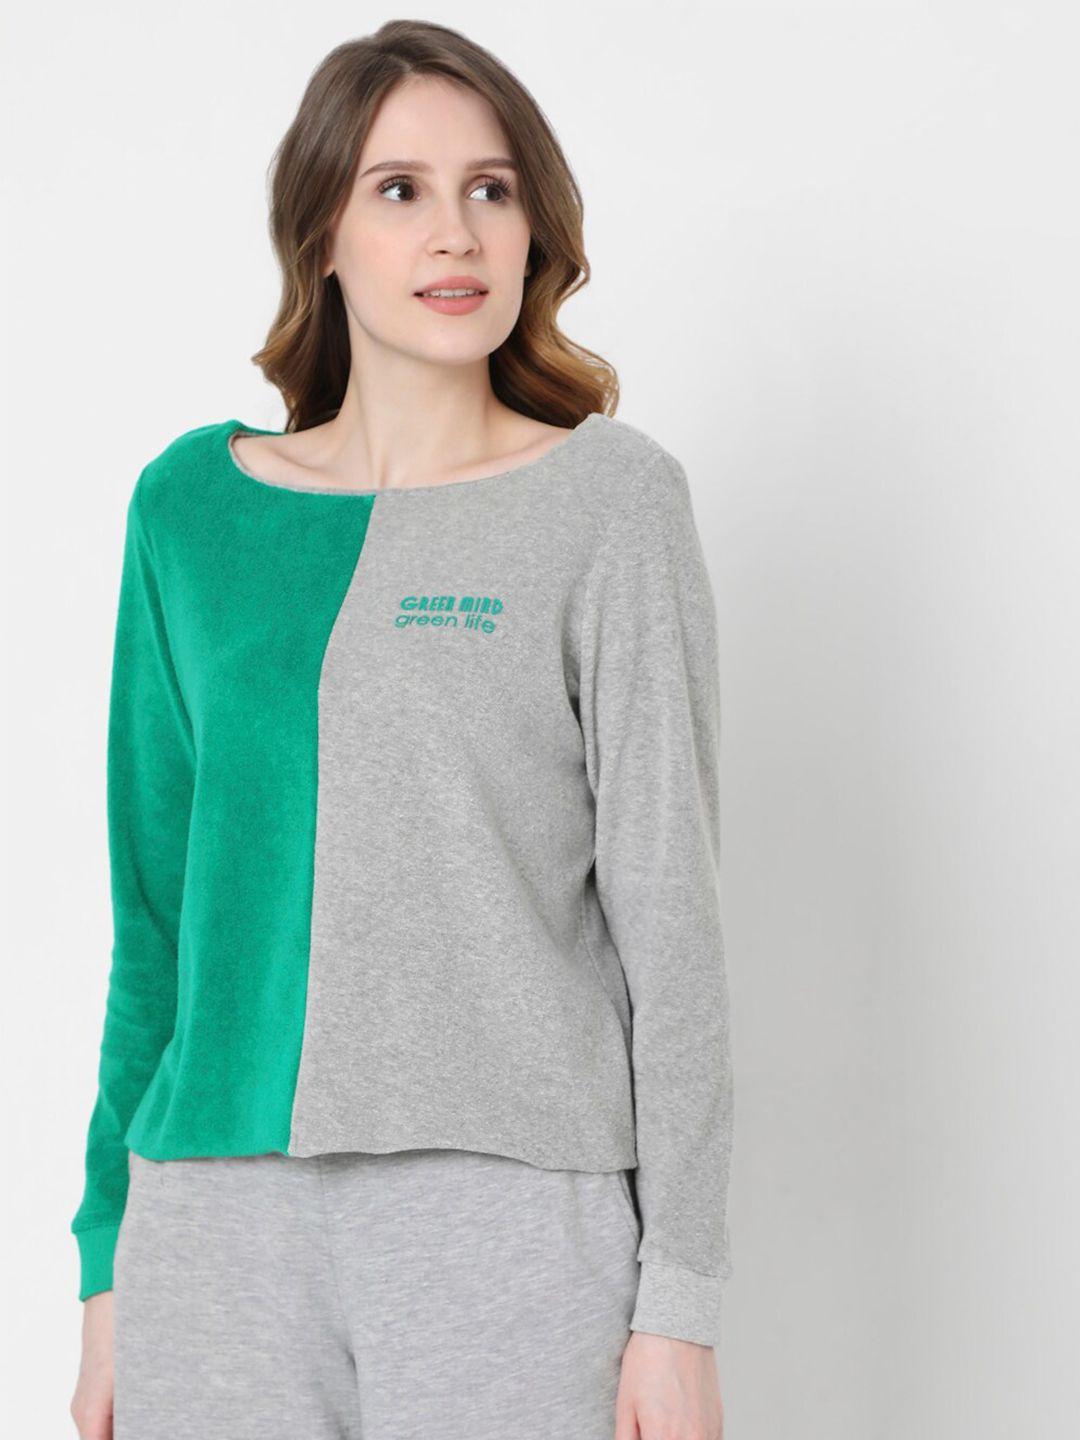 vero moda women grey & green colourblocked sweatshirt